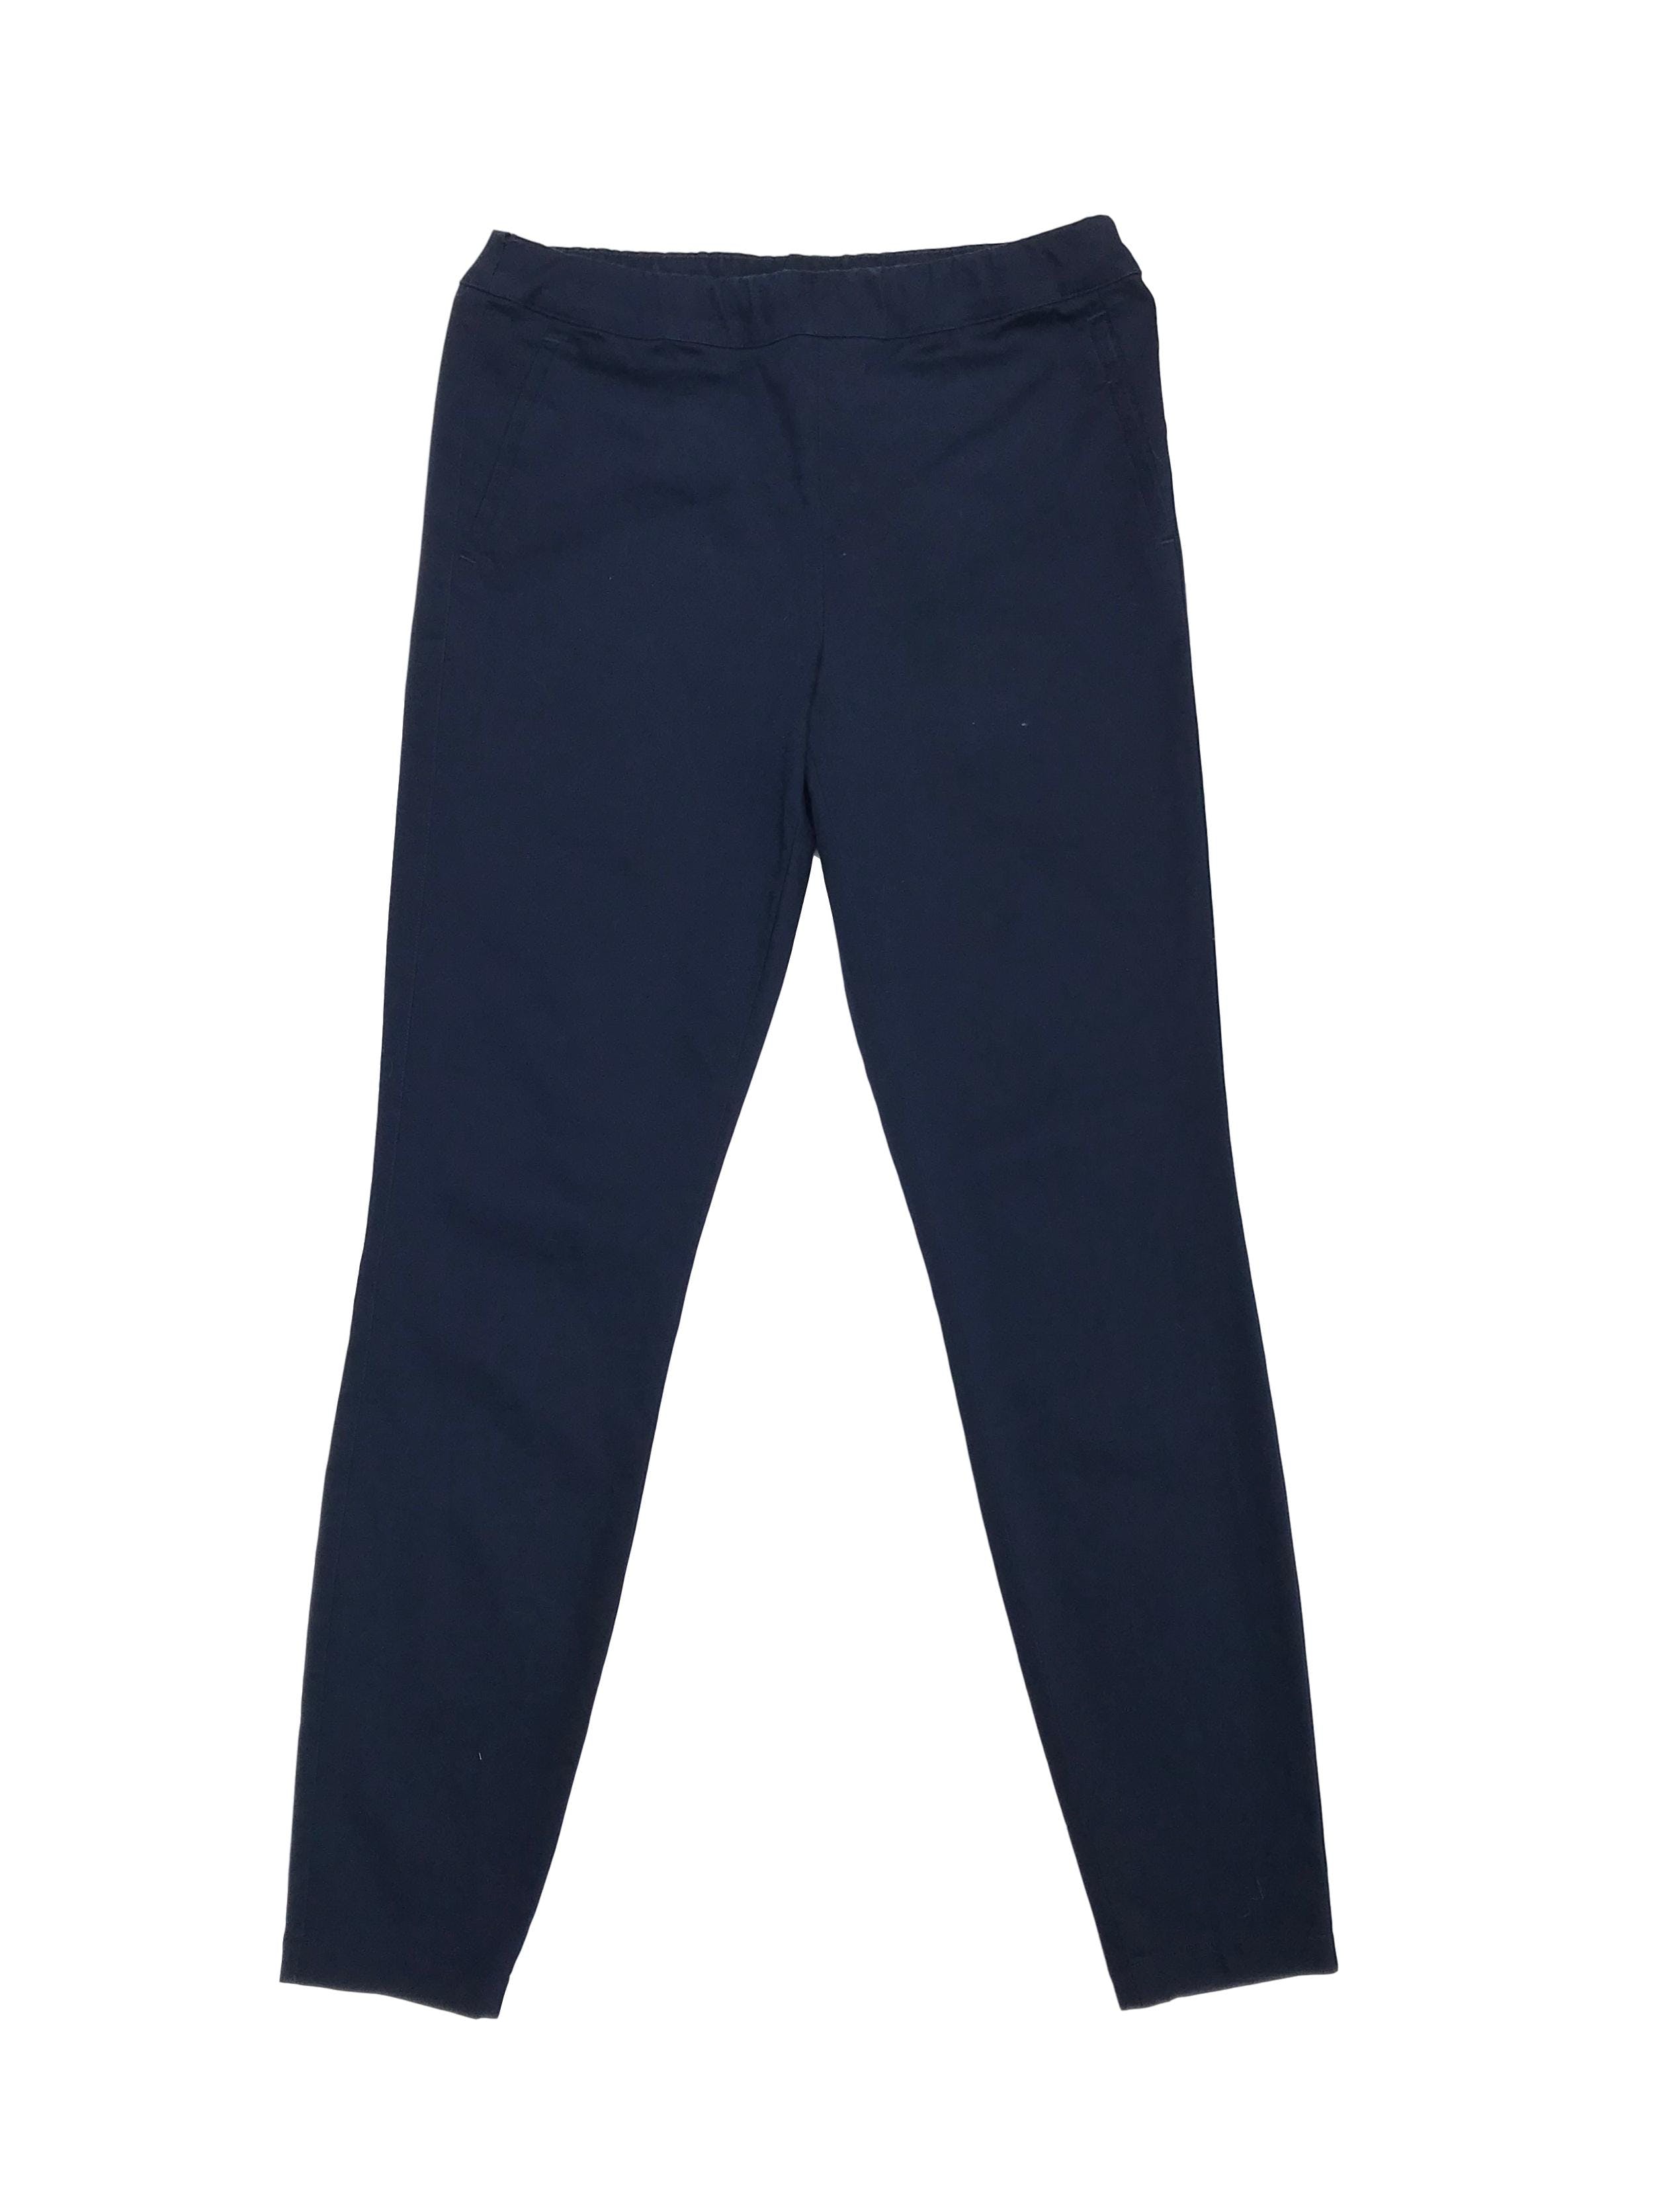 Pantalón estilo jogger formal azul. Precio original S/ 320